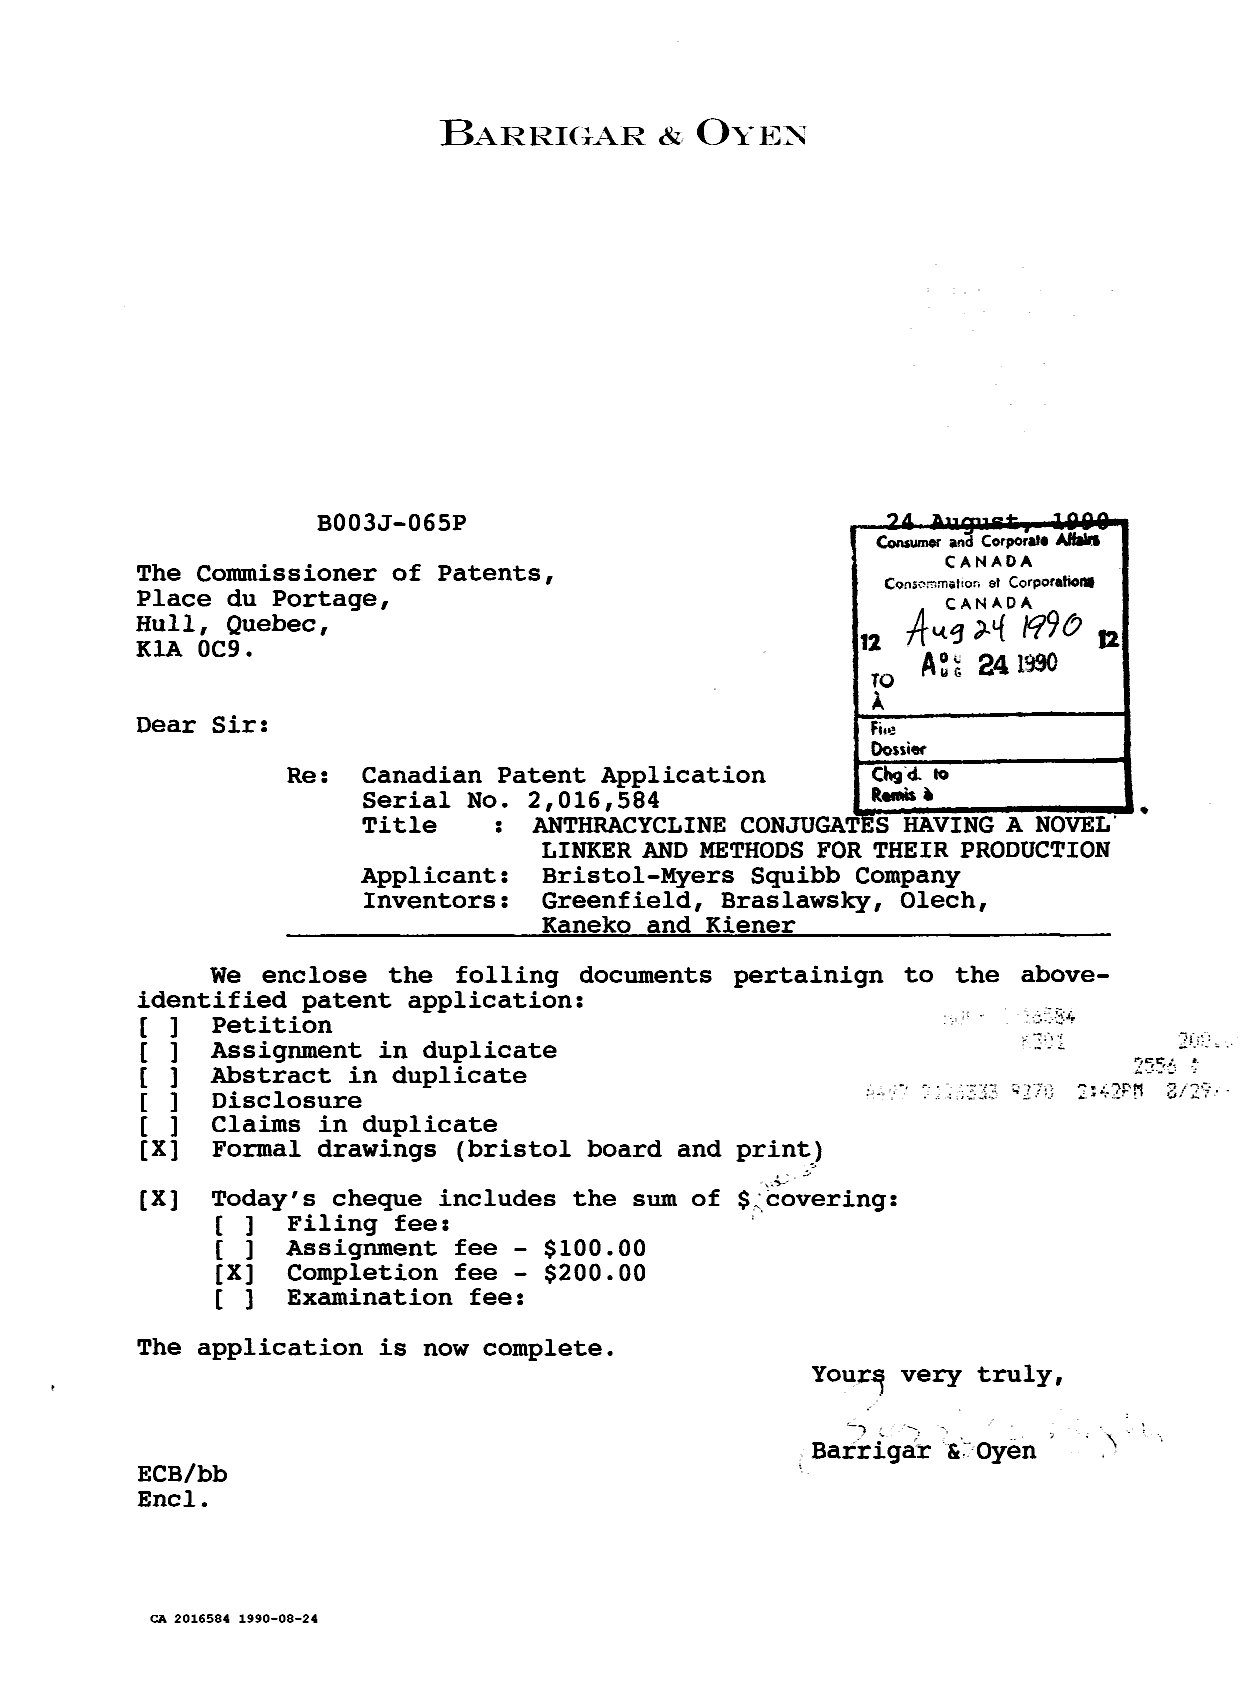 Canadian Patent Document 2016584. Prosecution Correspondence 19900824. Image 1 of 1